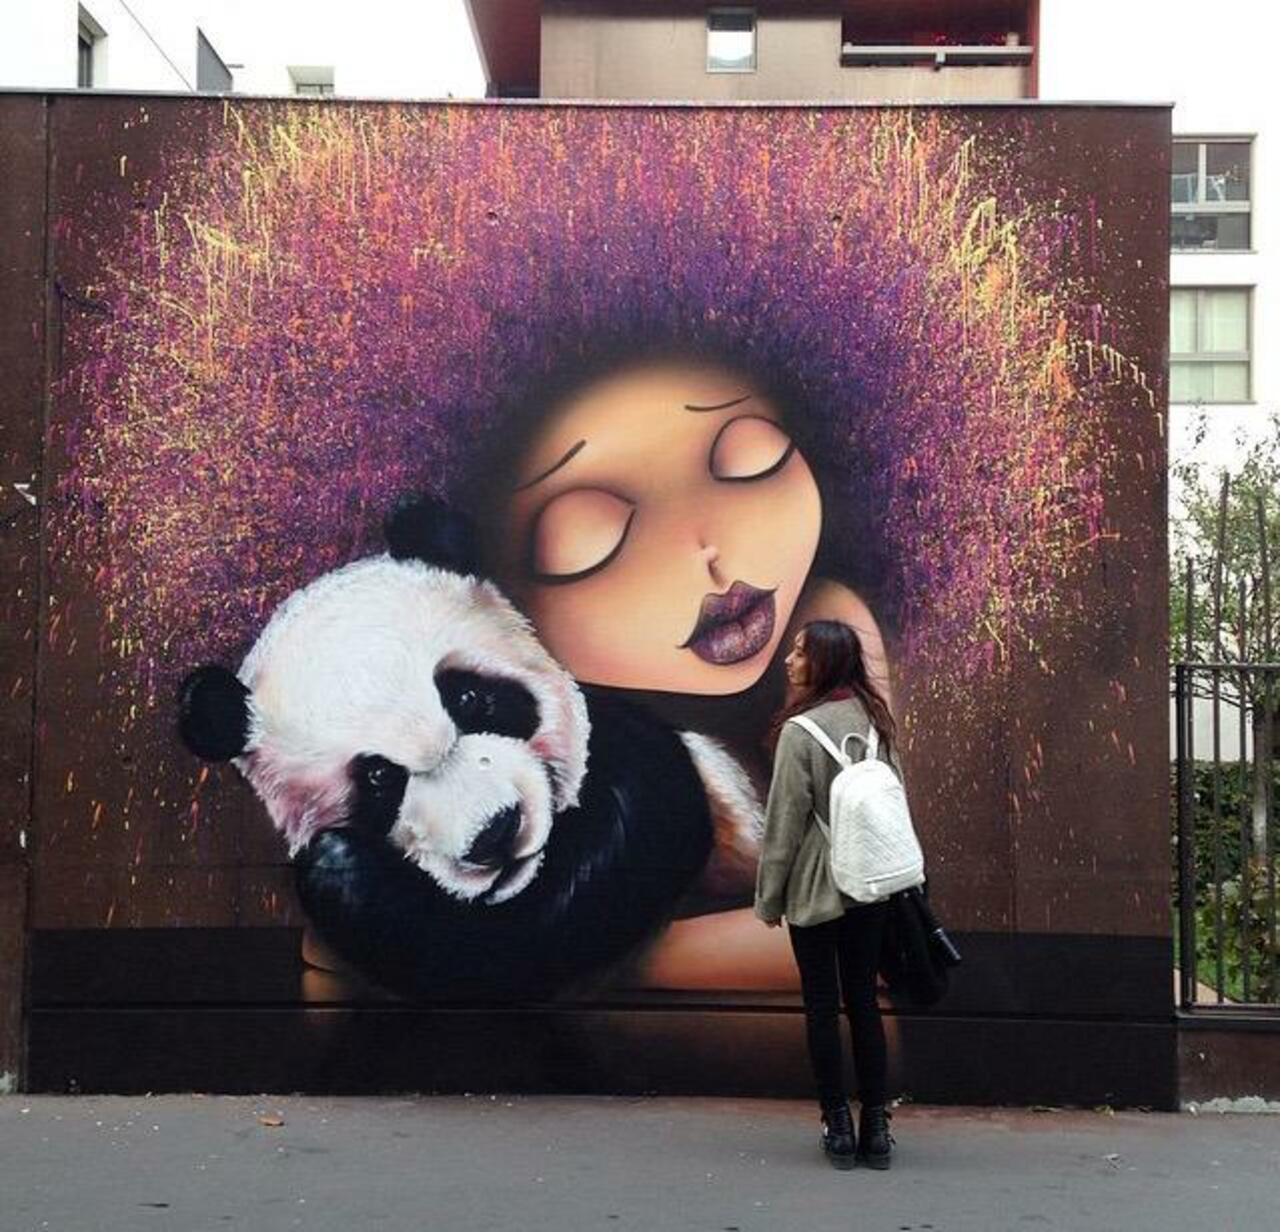 Street Art by VinieGraffiti in Paris 

#art #graffiti #mural #streetart http://t.co/E4xddkYHO6